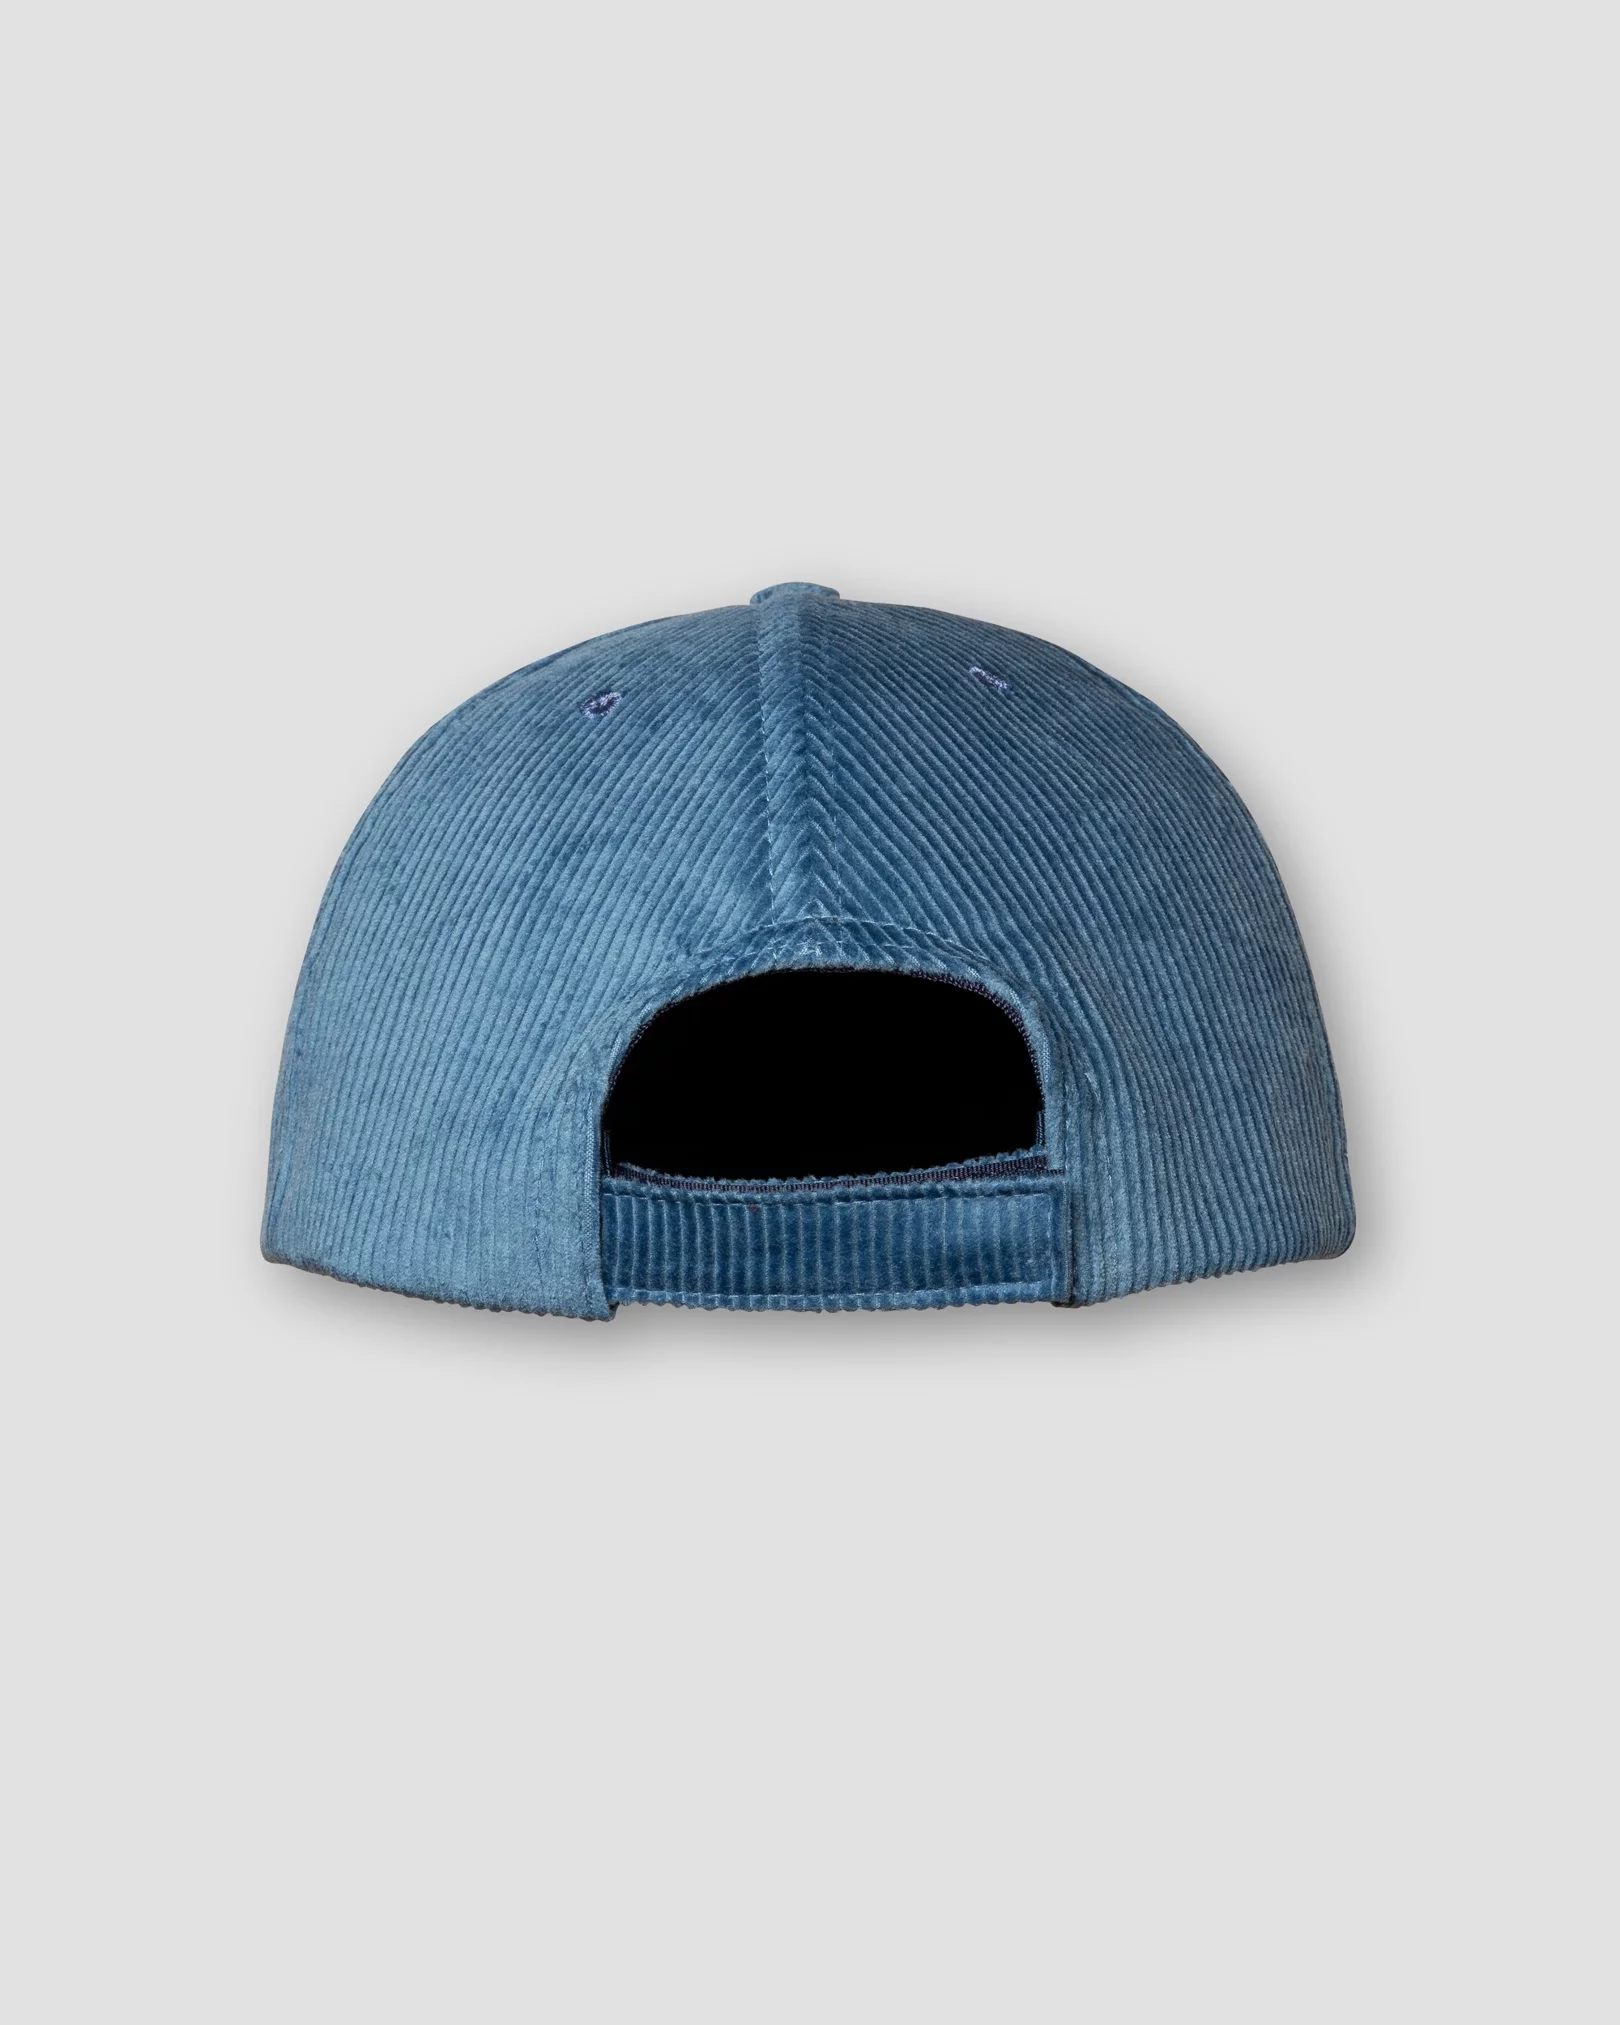 Eton - mid blue corduroy baseball cap